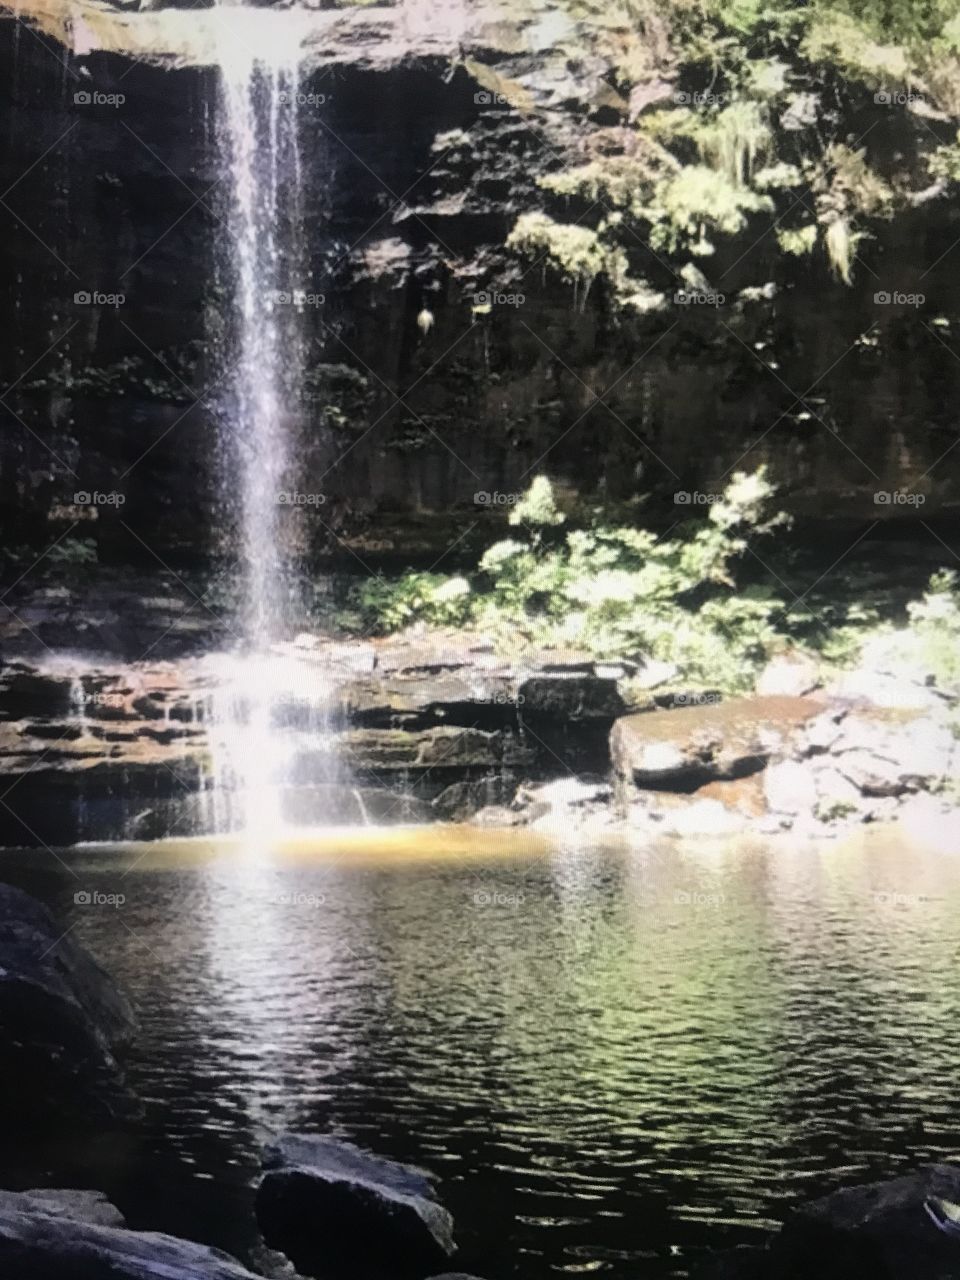 Wentworth falls waterfall